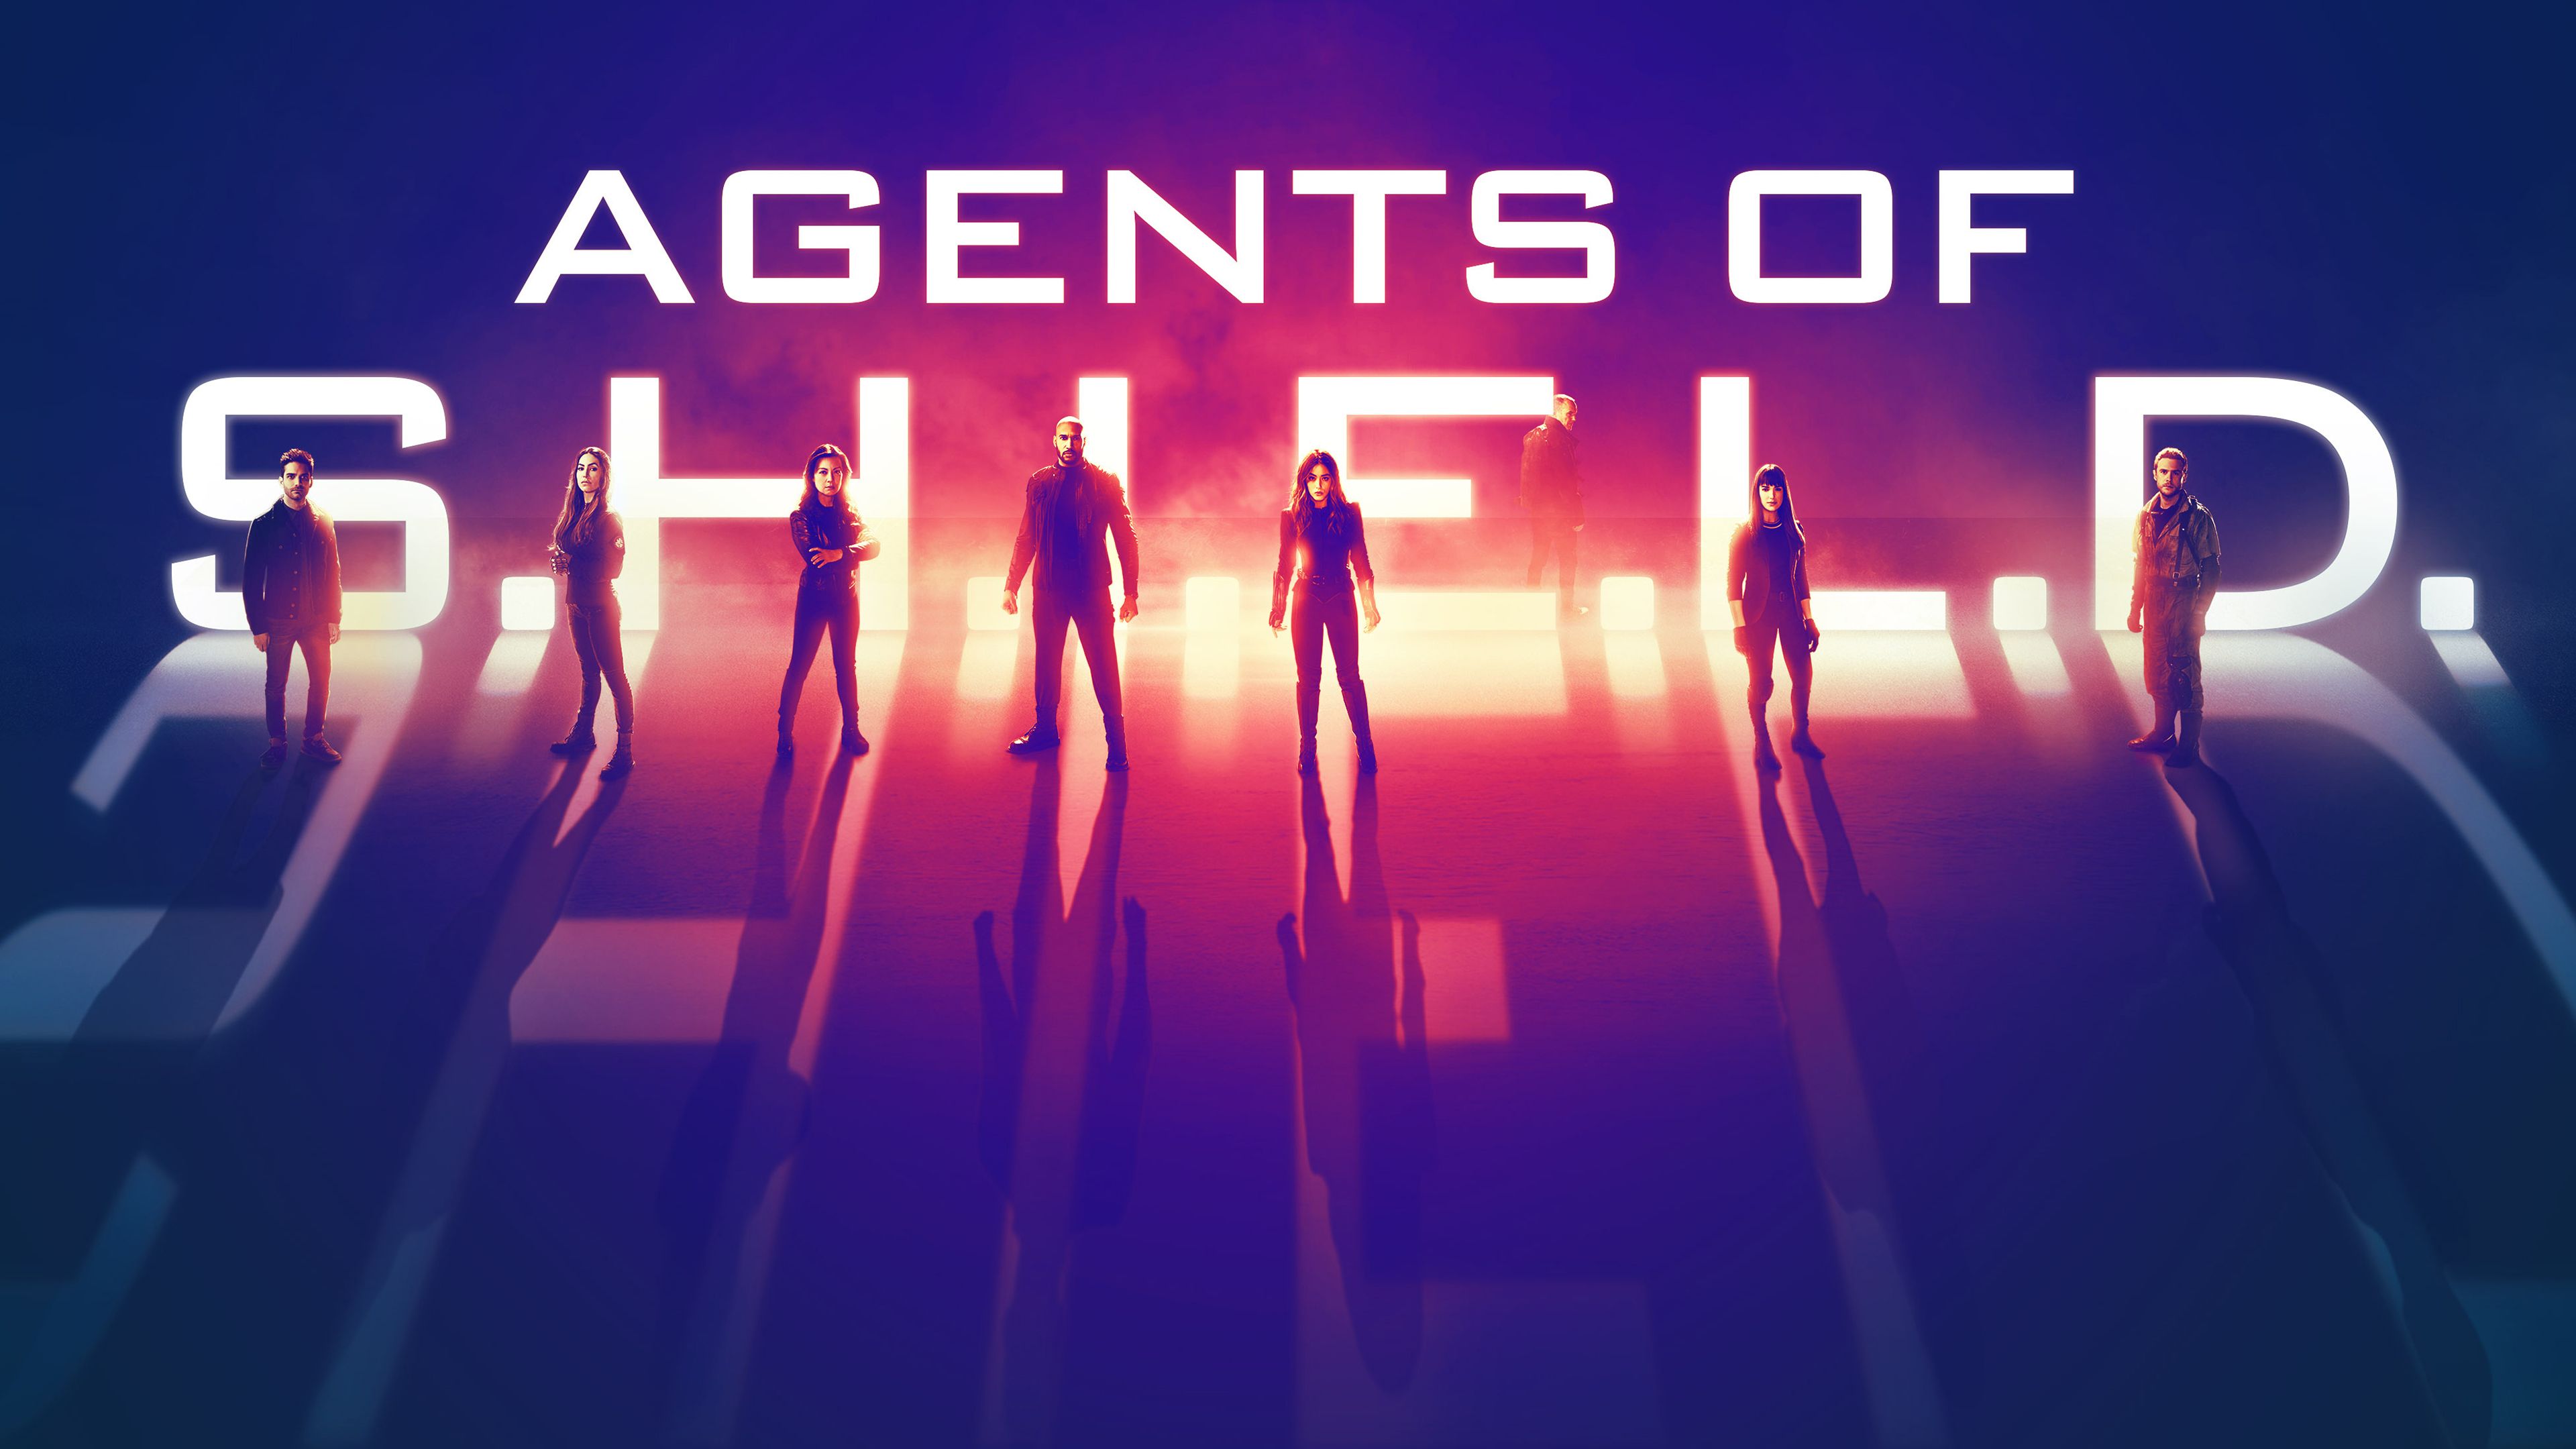 Marvel's Agents of S.H.I.E.L.D. Season 06 Poster 4k Ultra HD Wallpaper